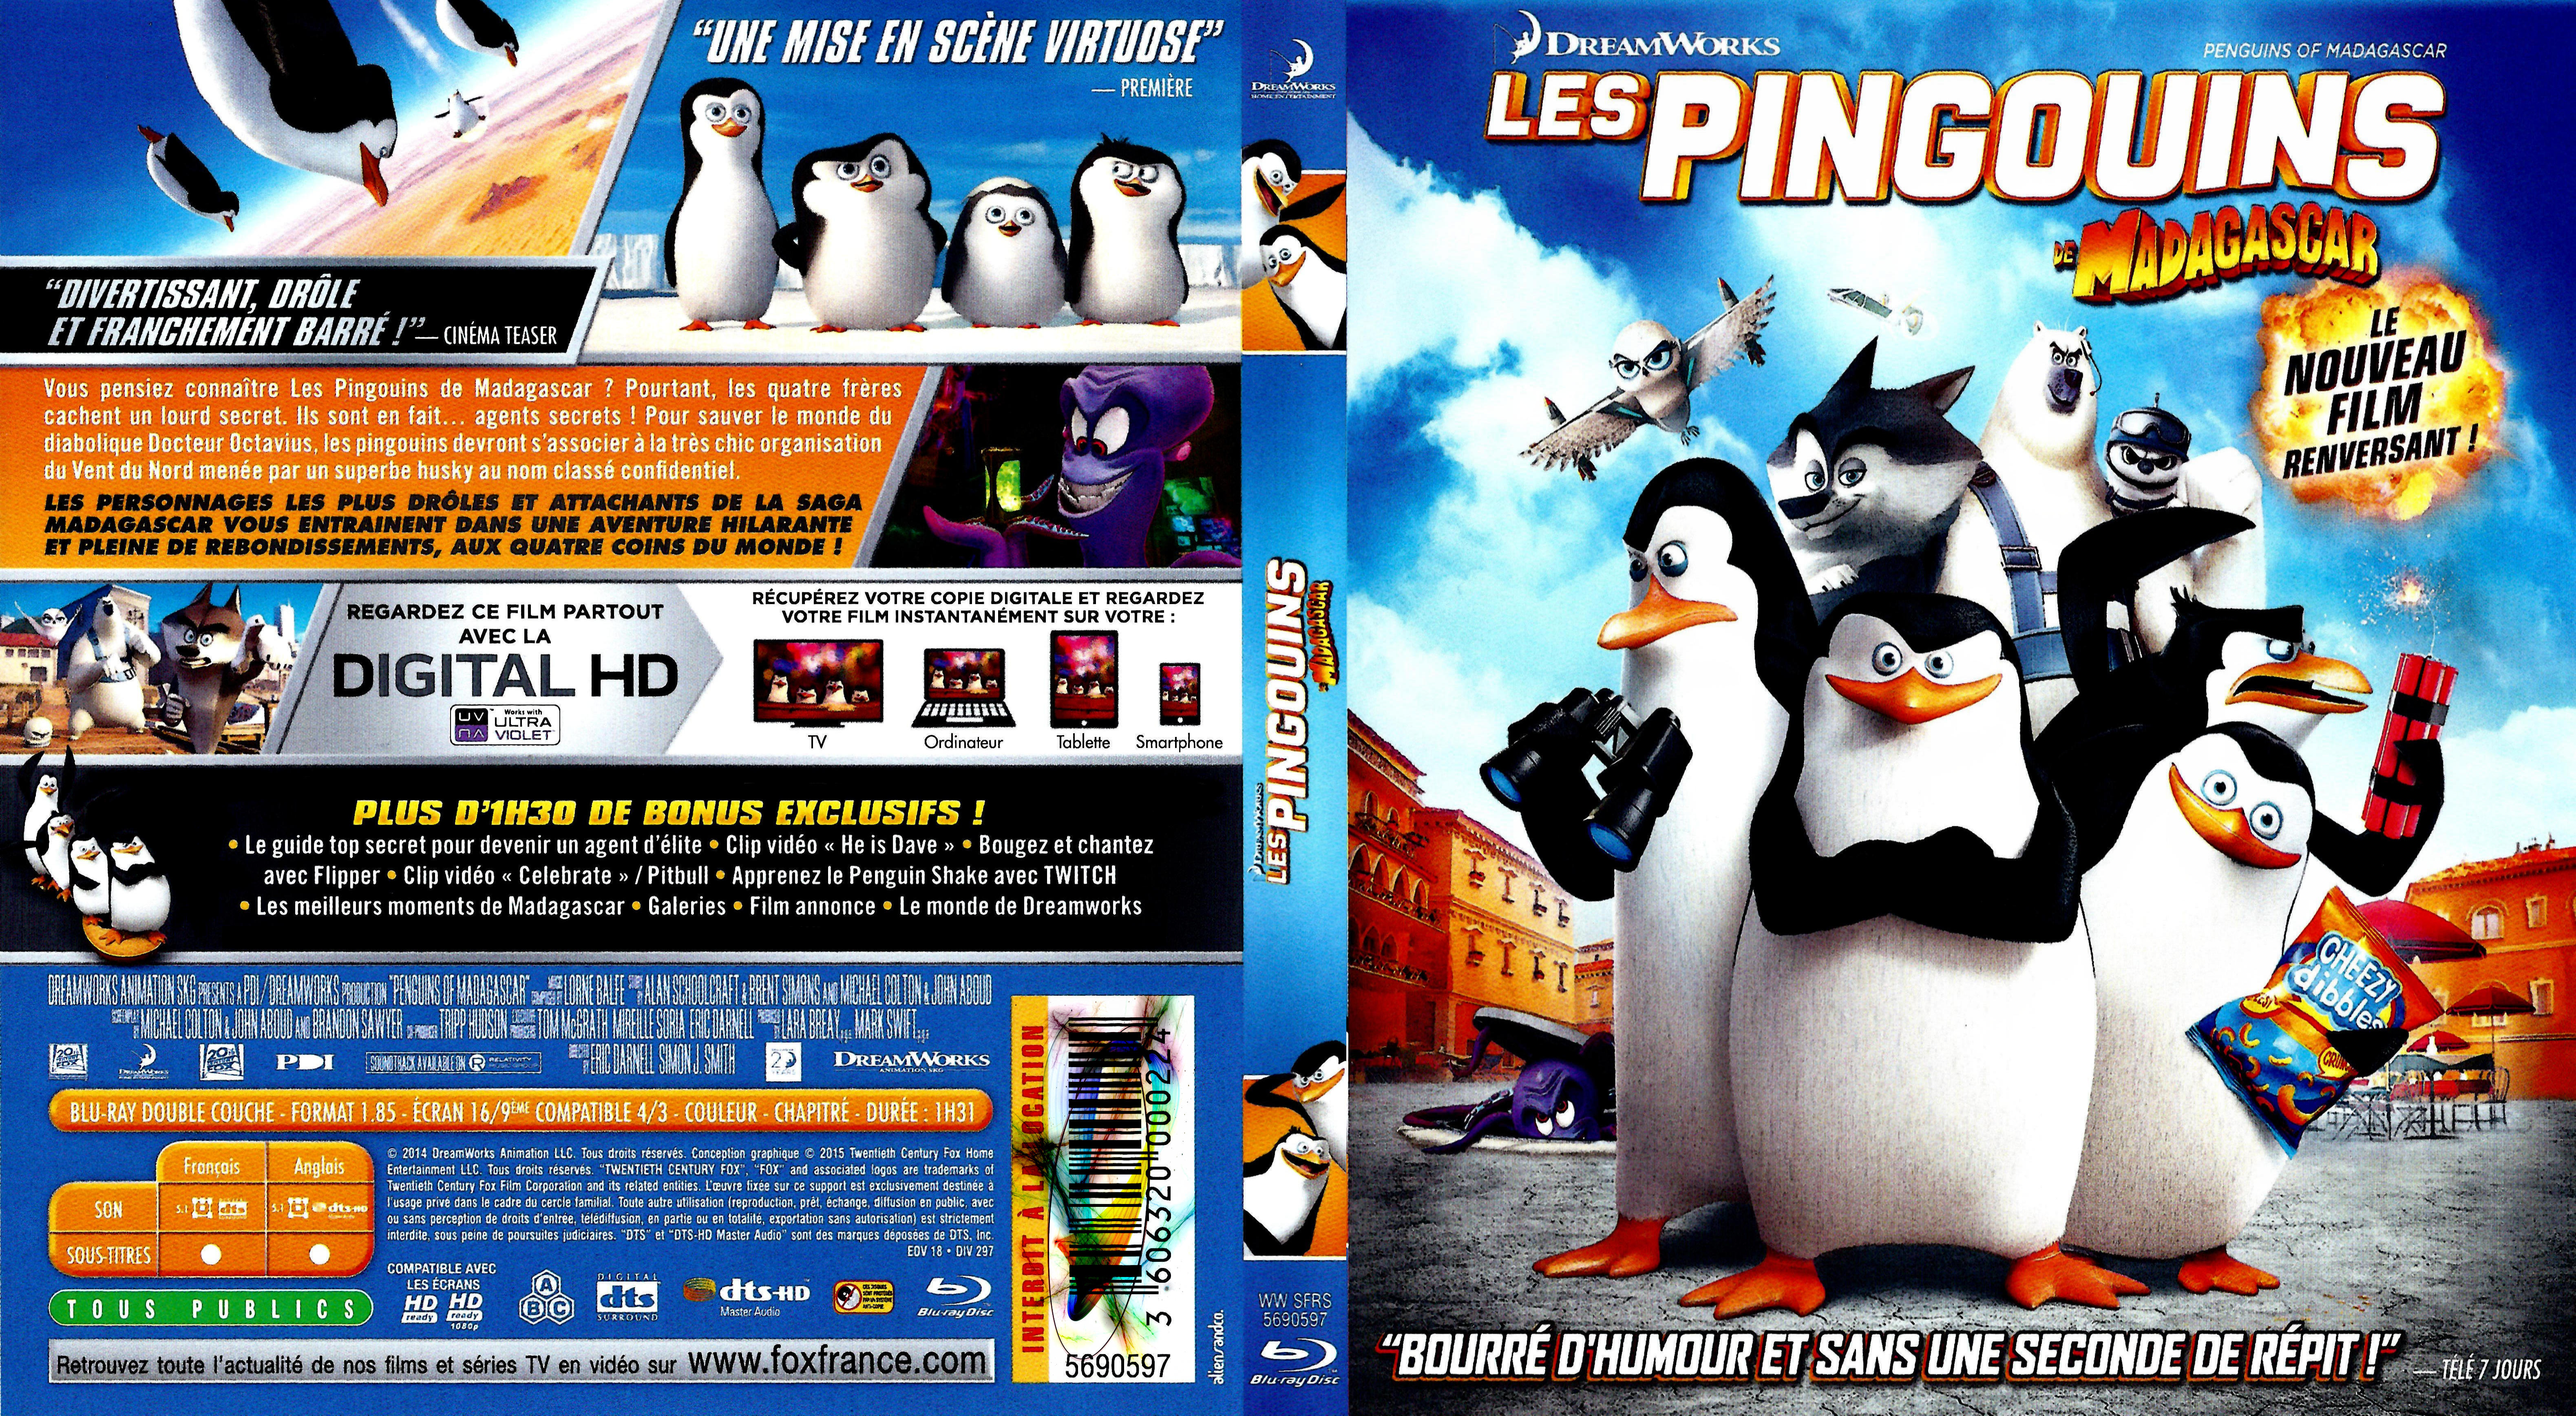 Jaquette DVD Les pingouins de Madagascar (BLU-RAY)